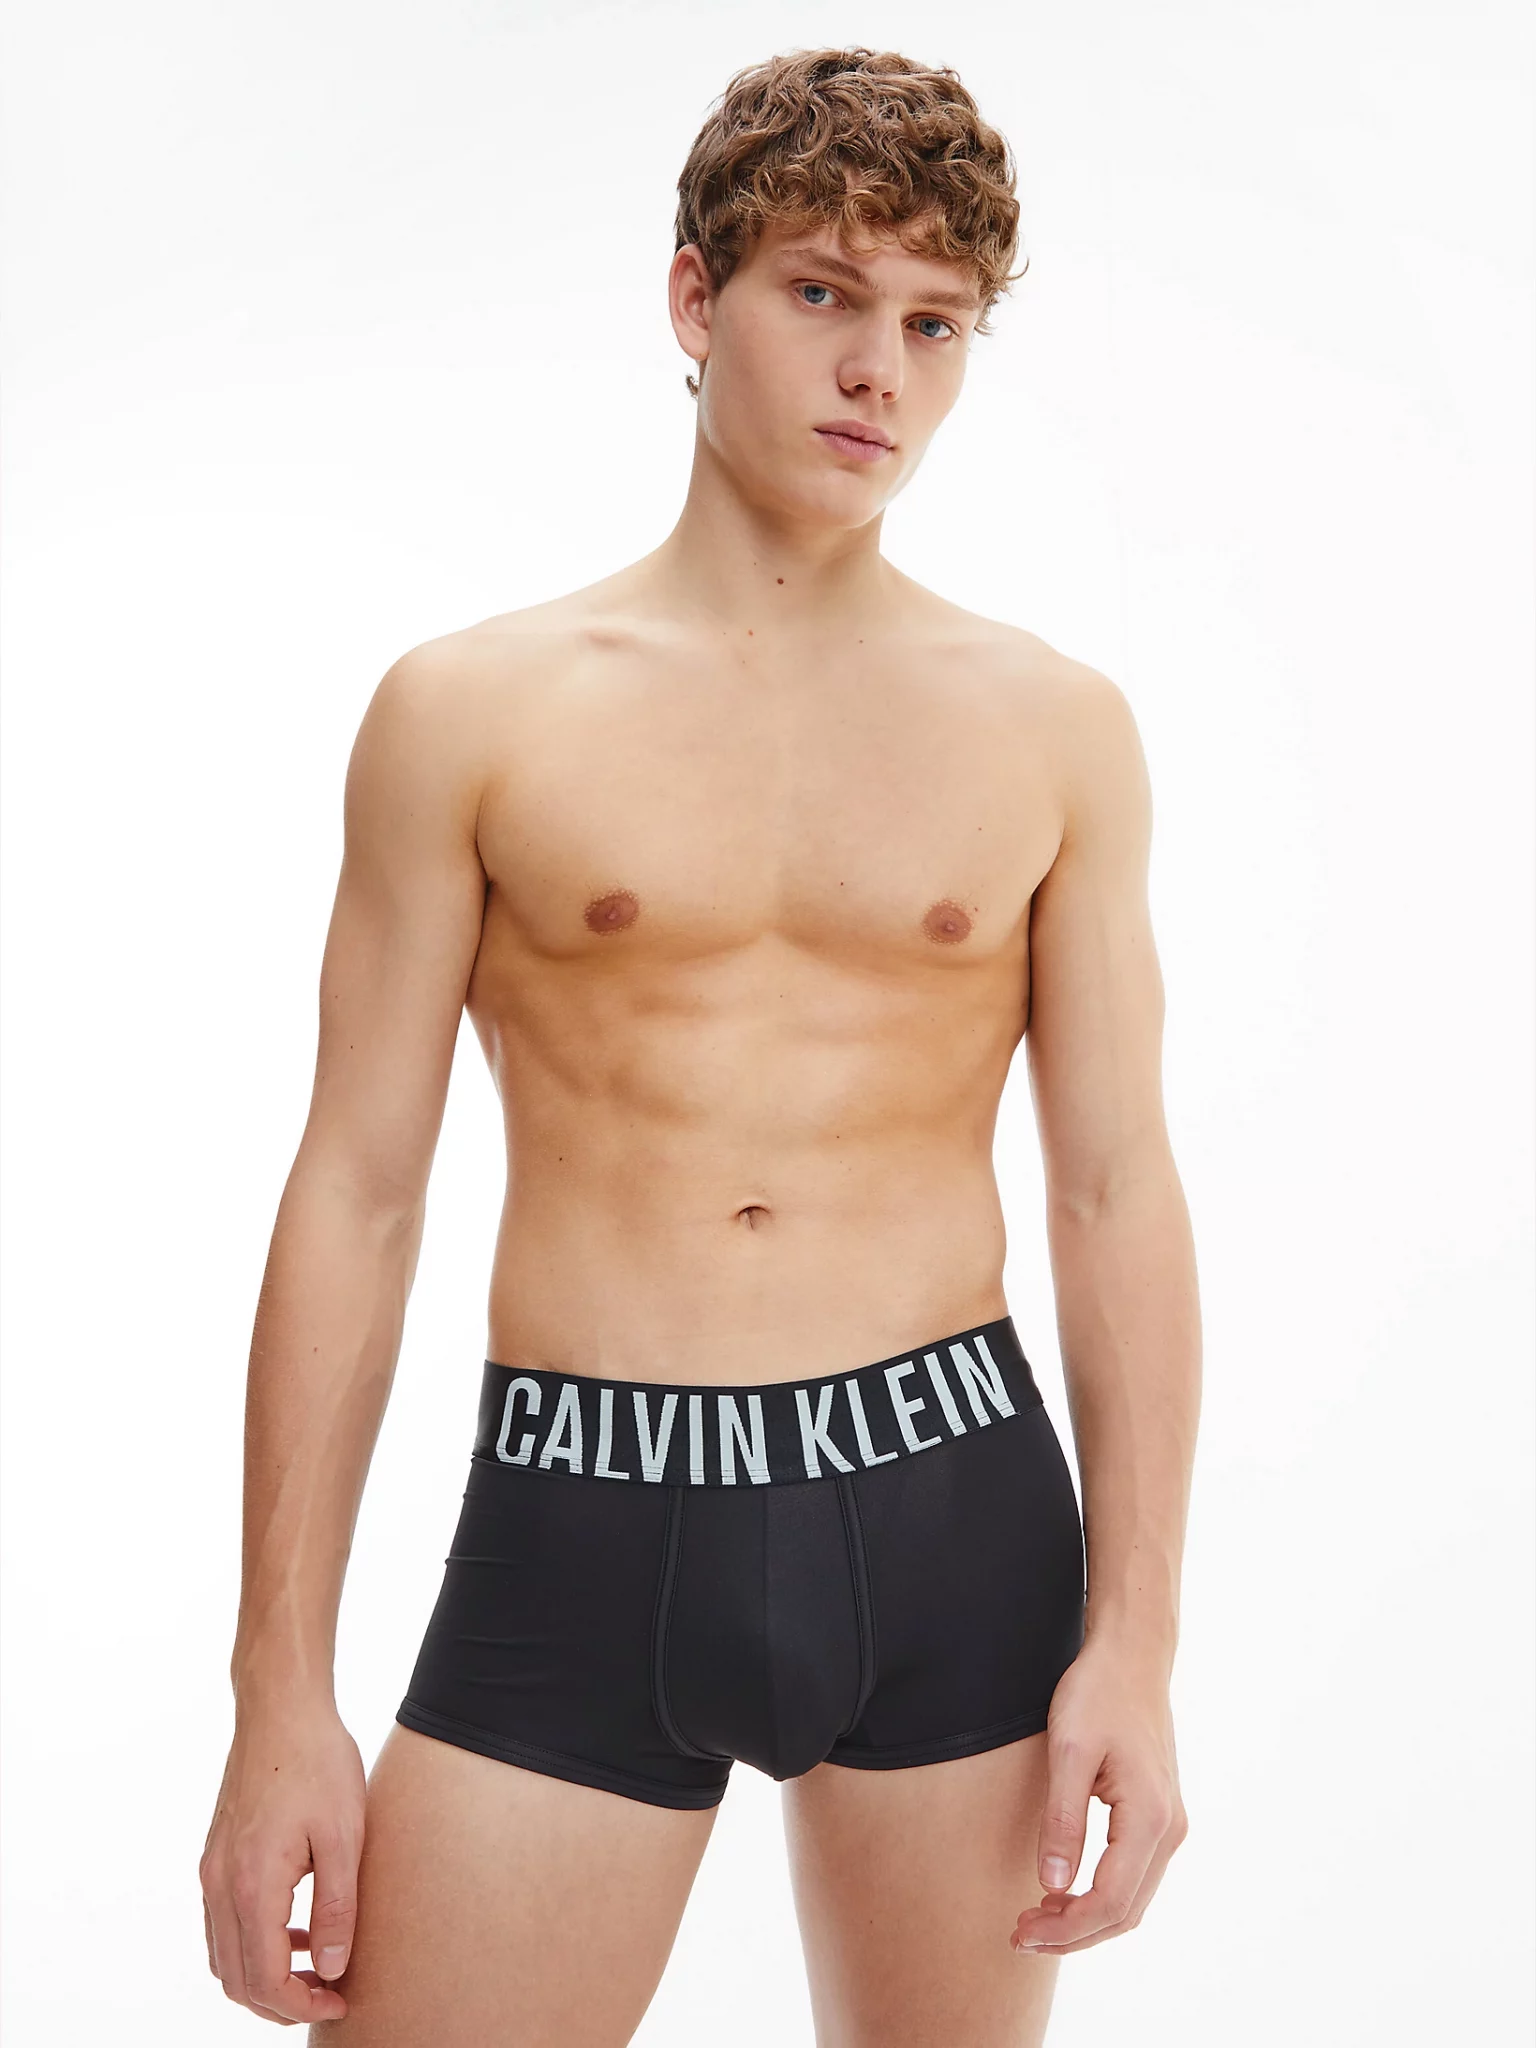 Klein Black Intense 2-Pack Calvin Store Scandinavian Fashion Trunks Buy - Power